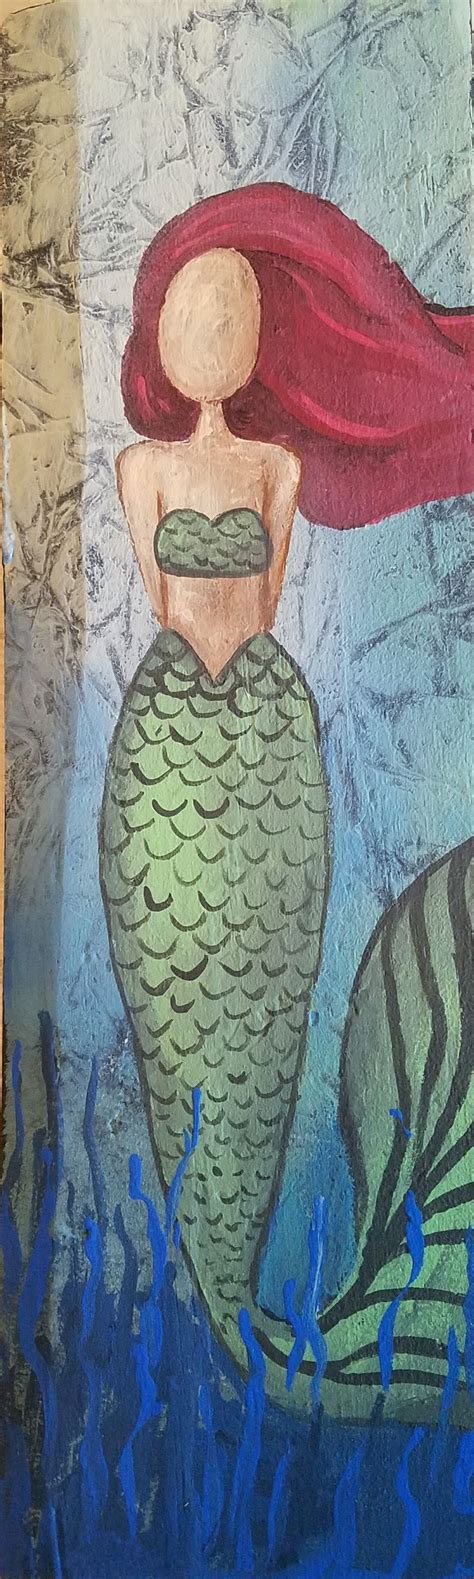 Easy Mermaid Acrylic Painting On Wooden Board By Johnny Mcnabb Art